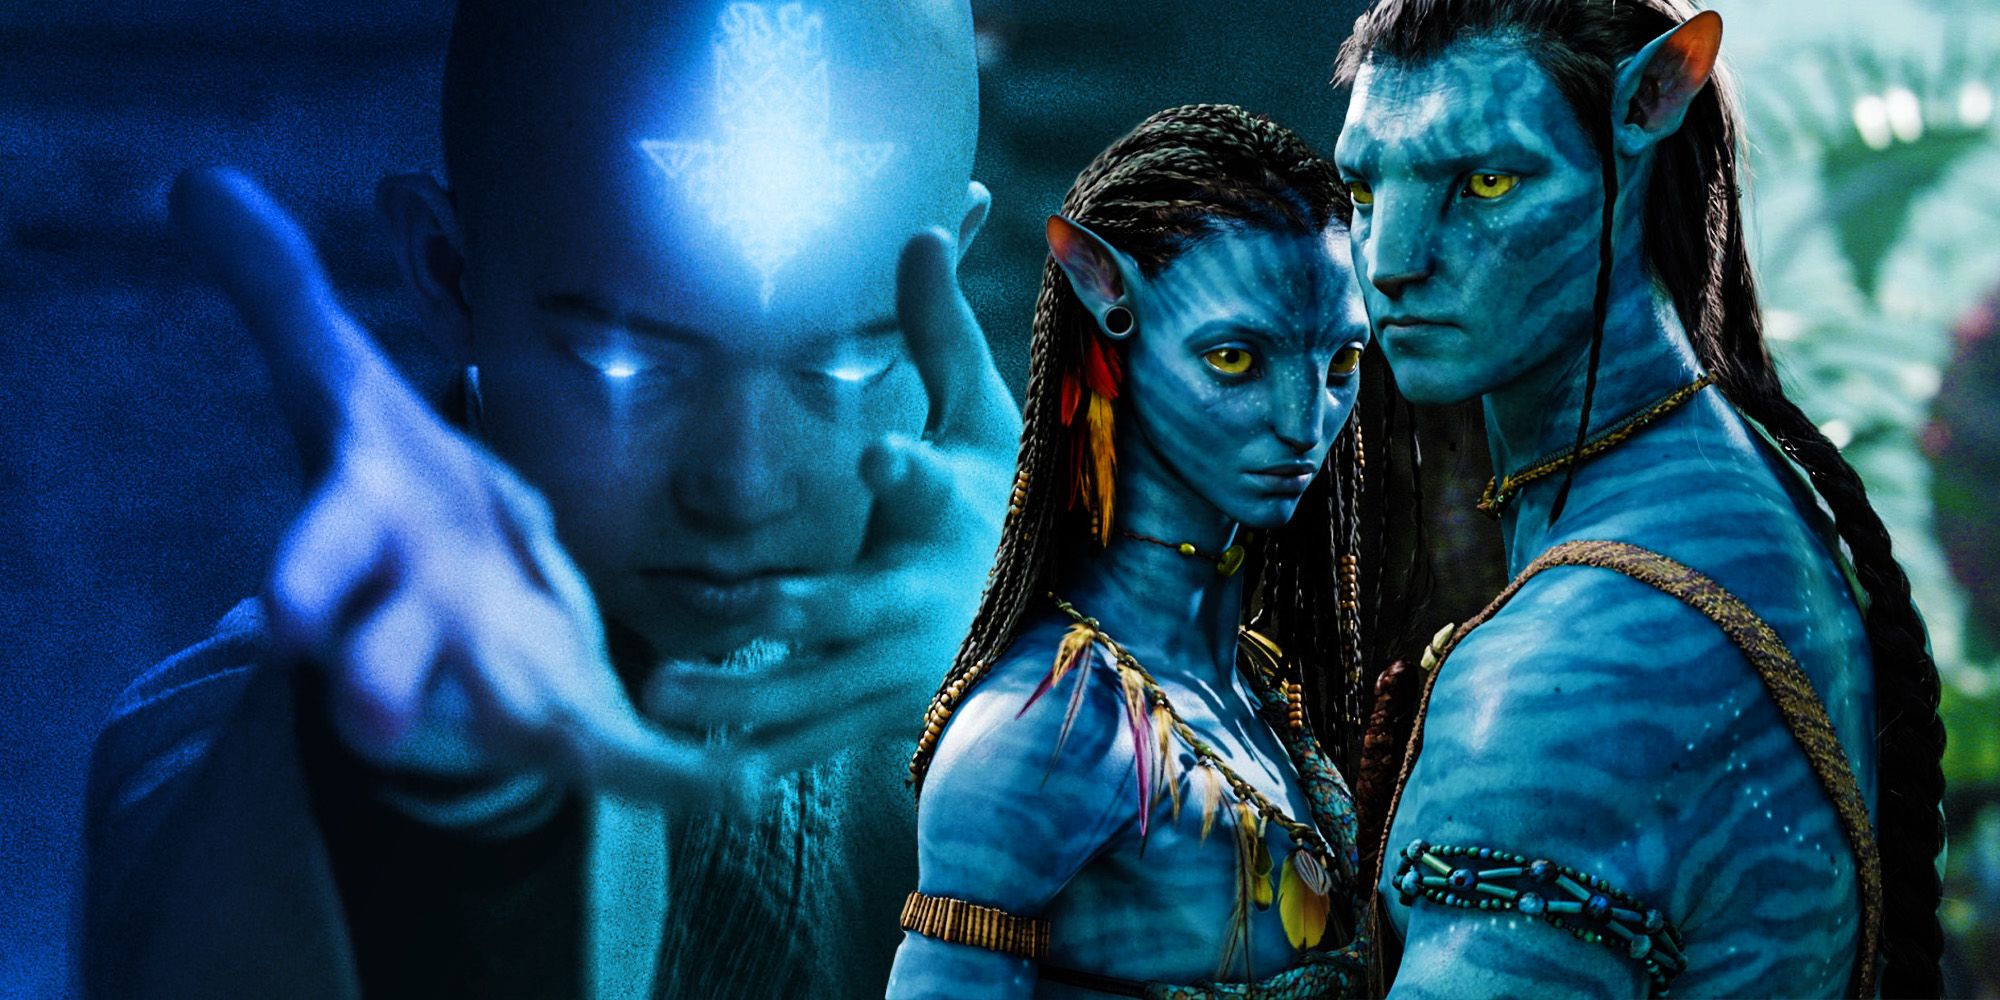 Avatar Avatar the last airbender movie